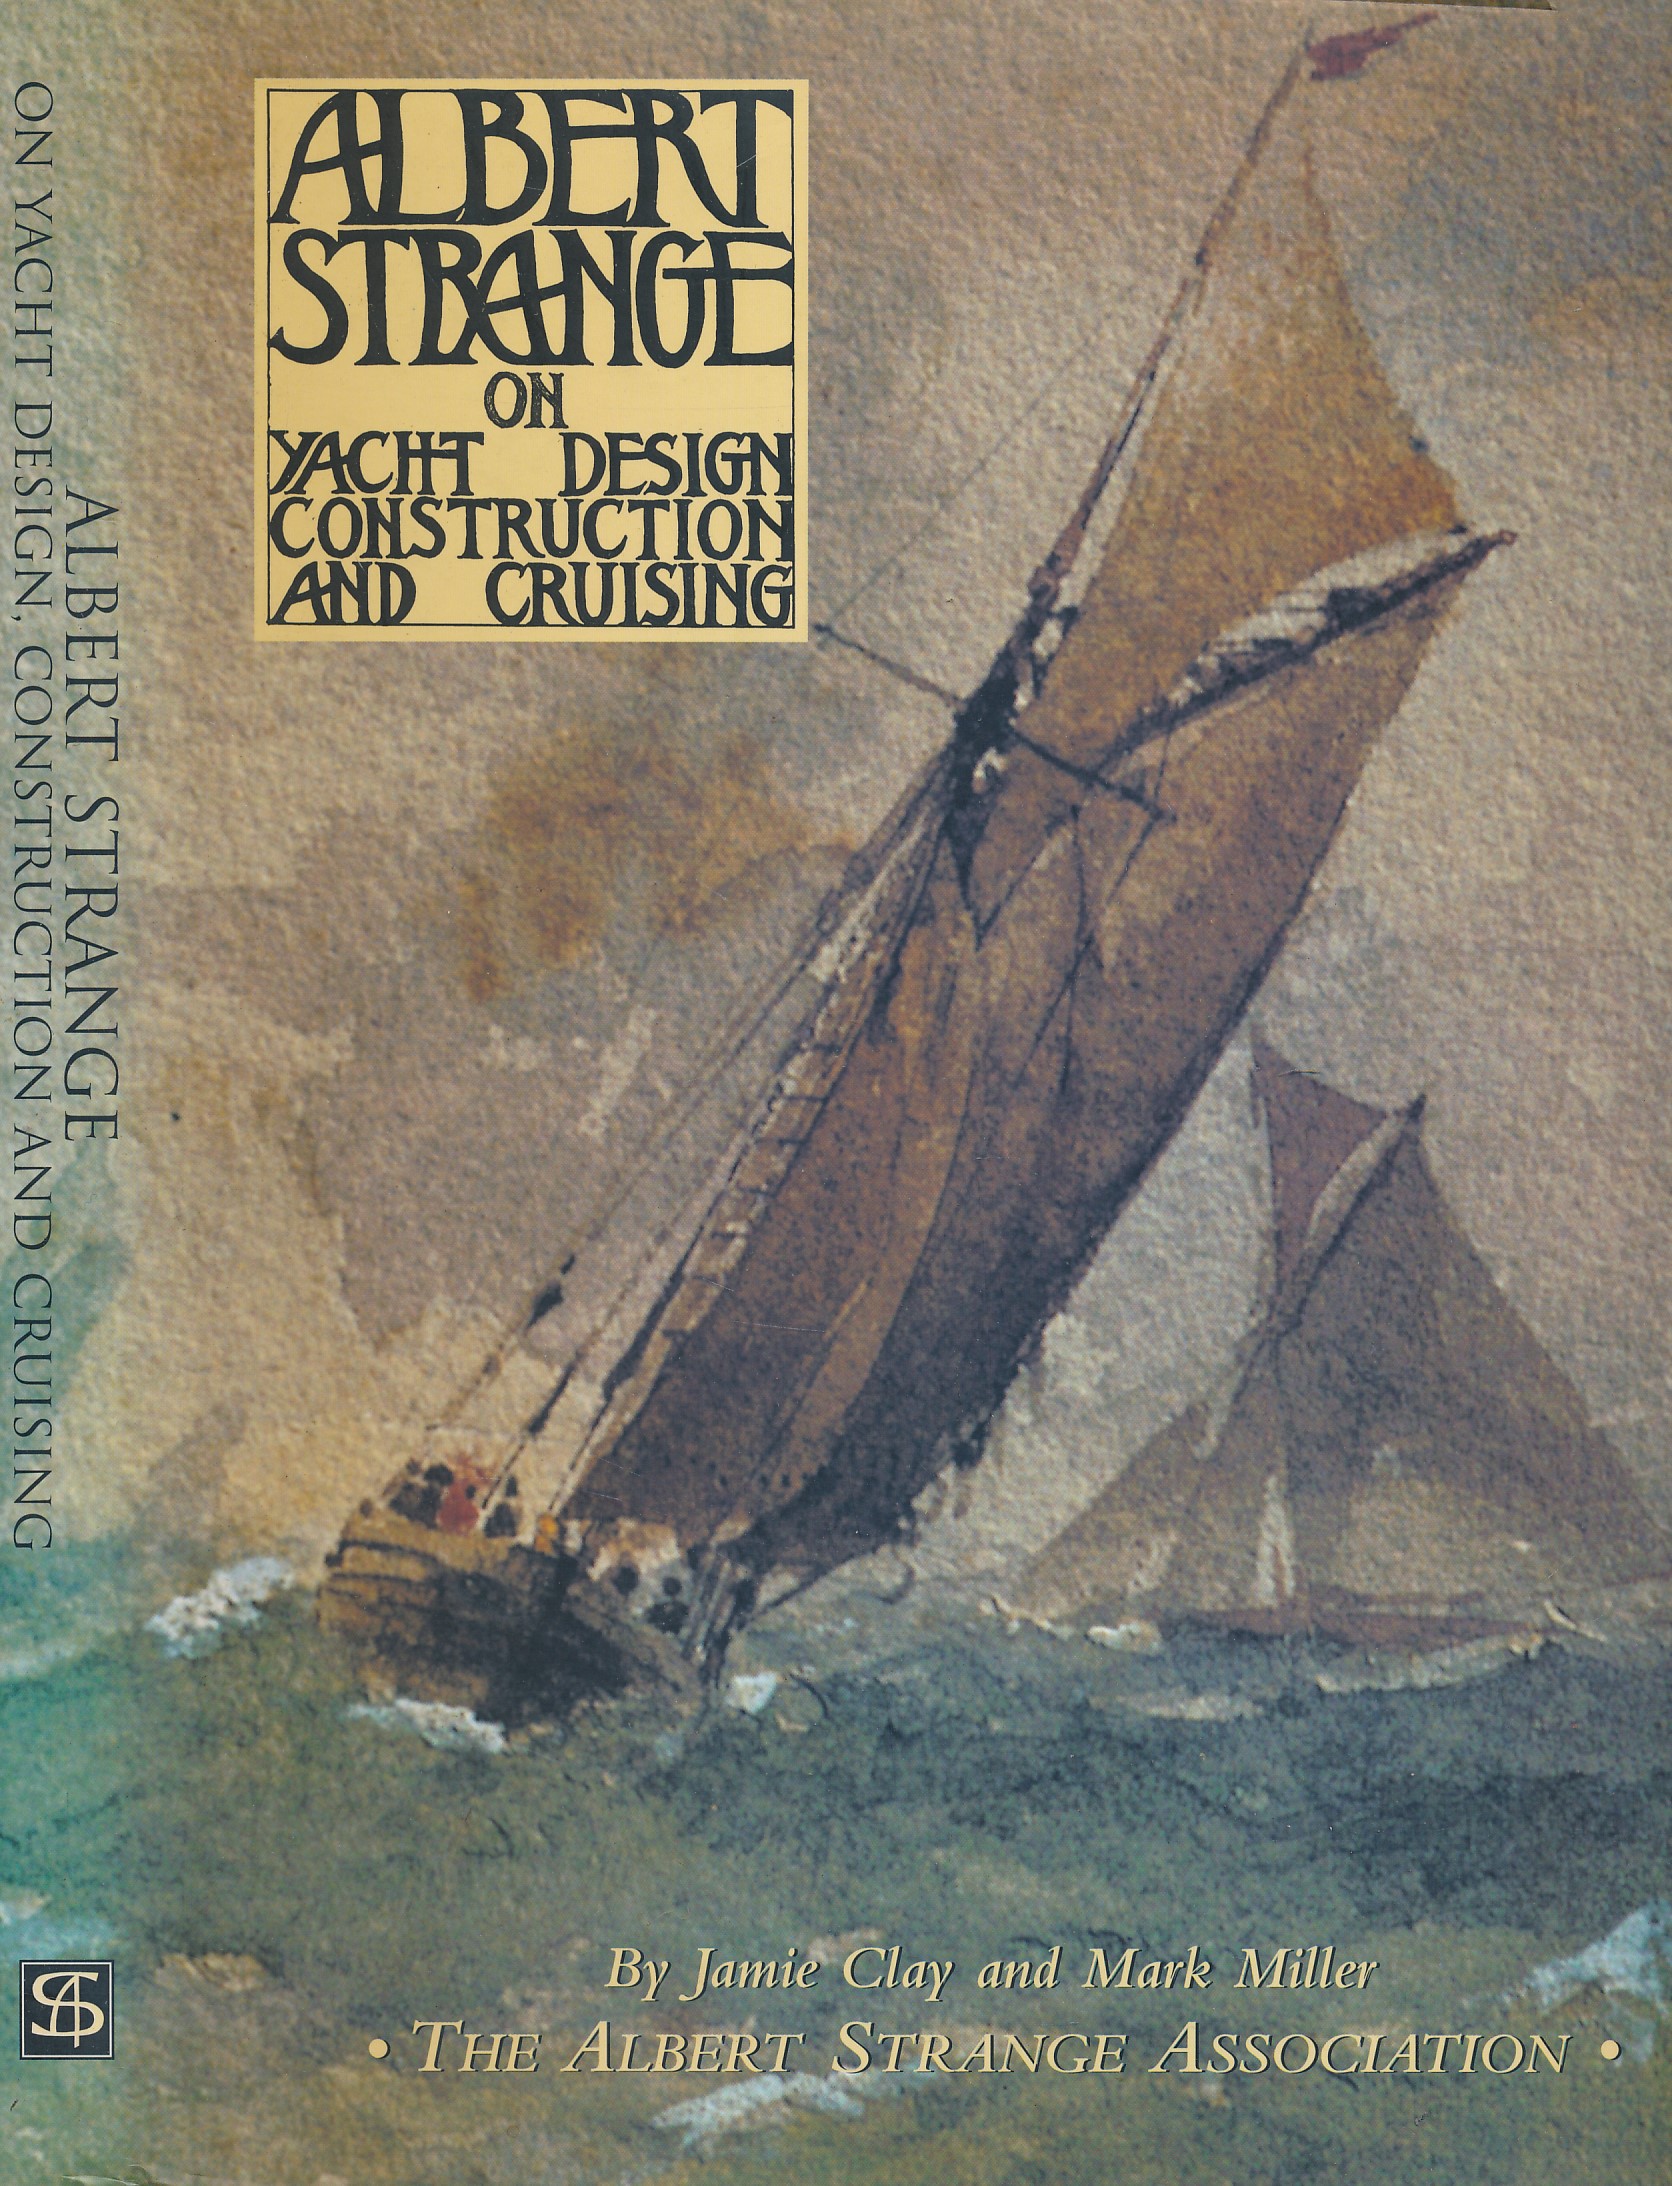 Albert Strange on Yacht Design, Construction  and Cruising